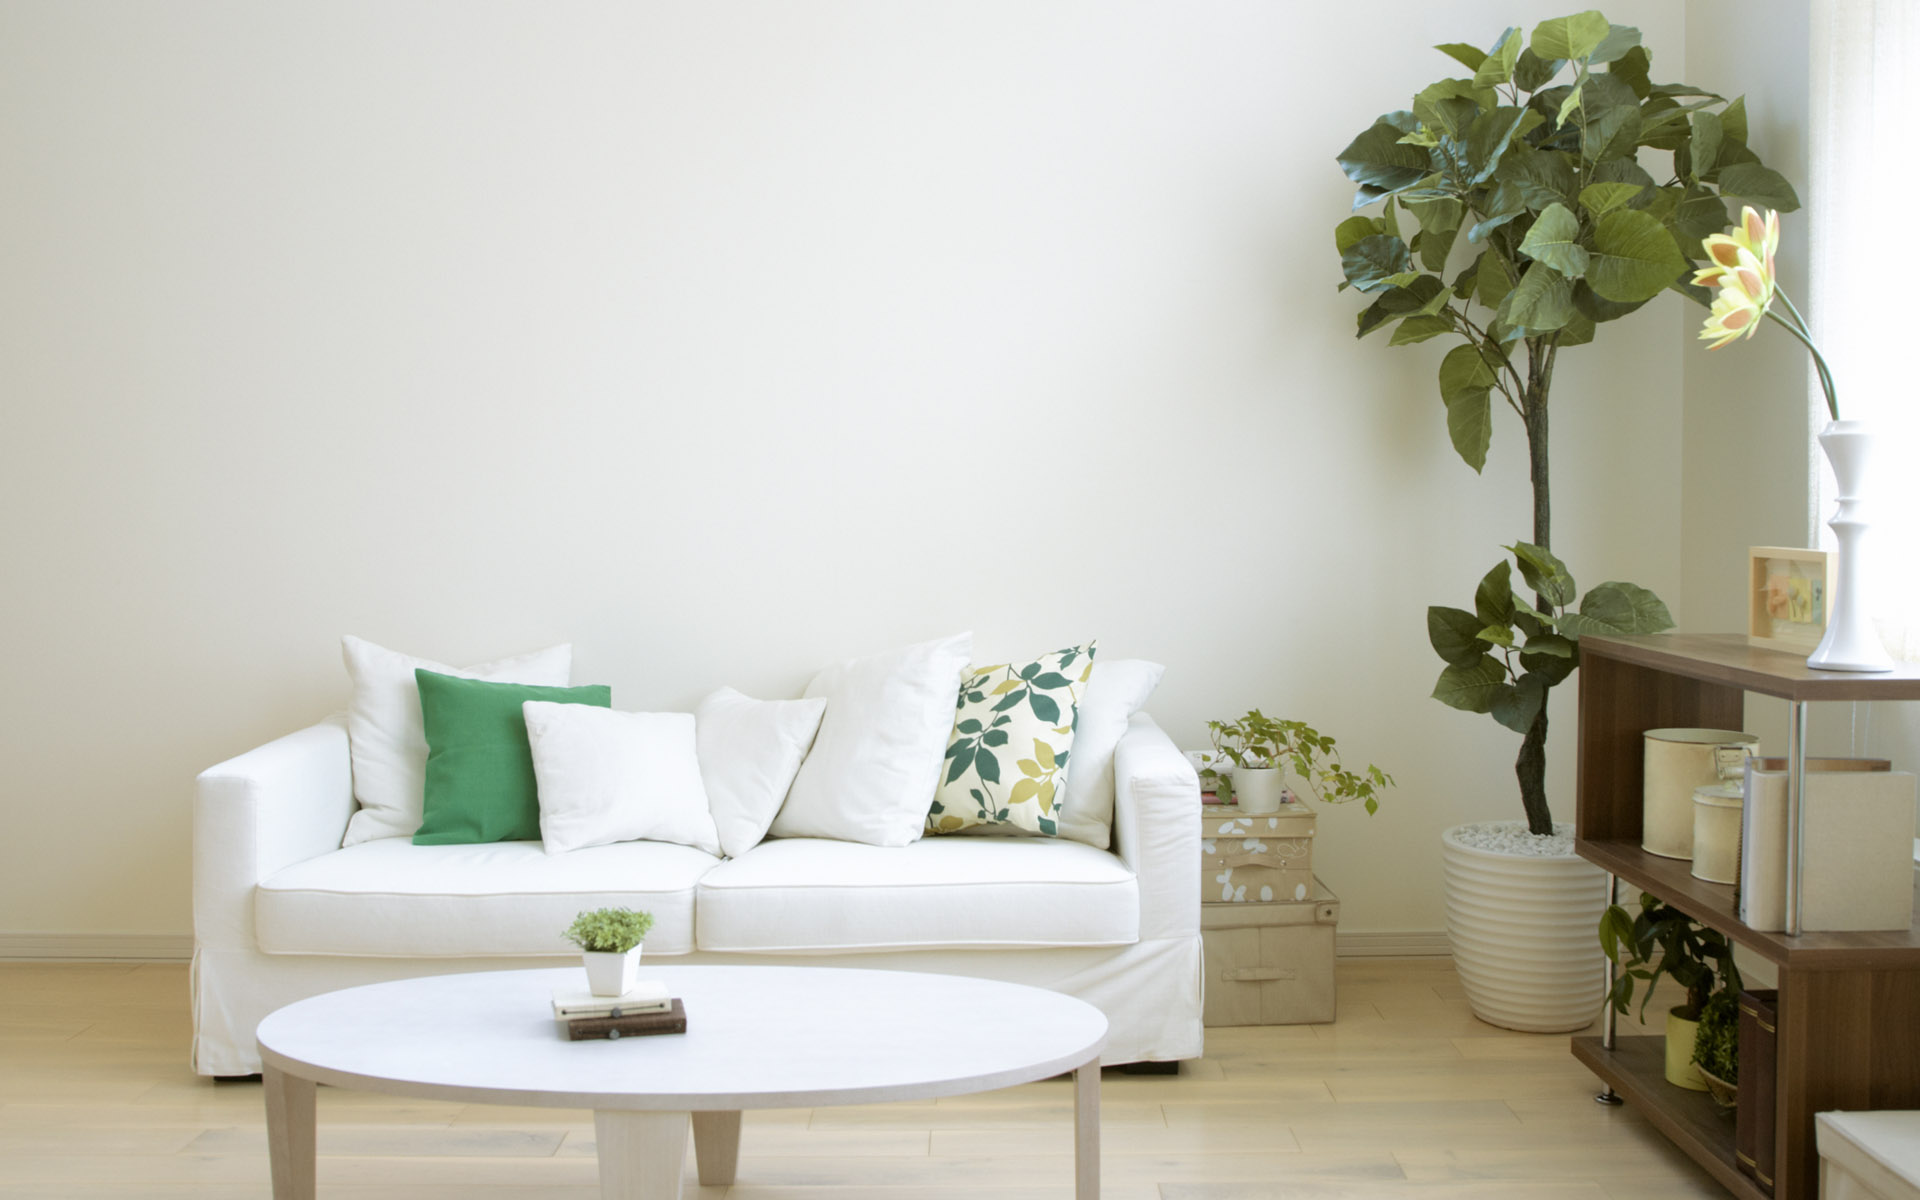 3d Living Room Desktop Wallpaper Designs For